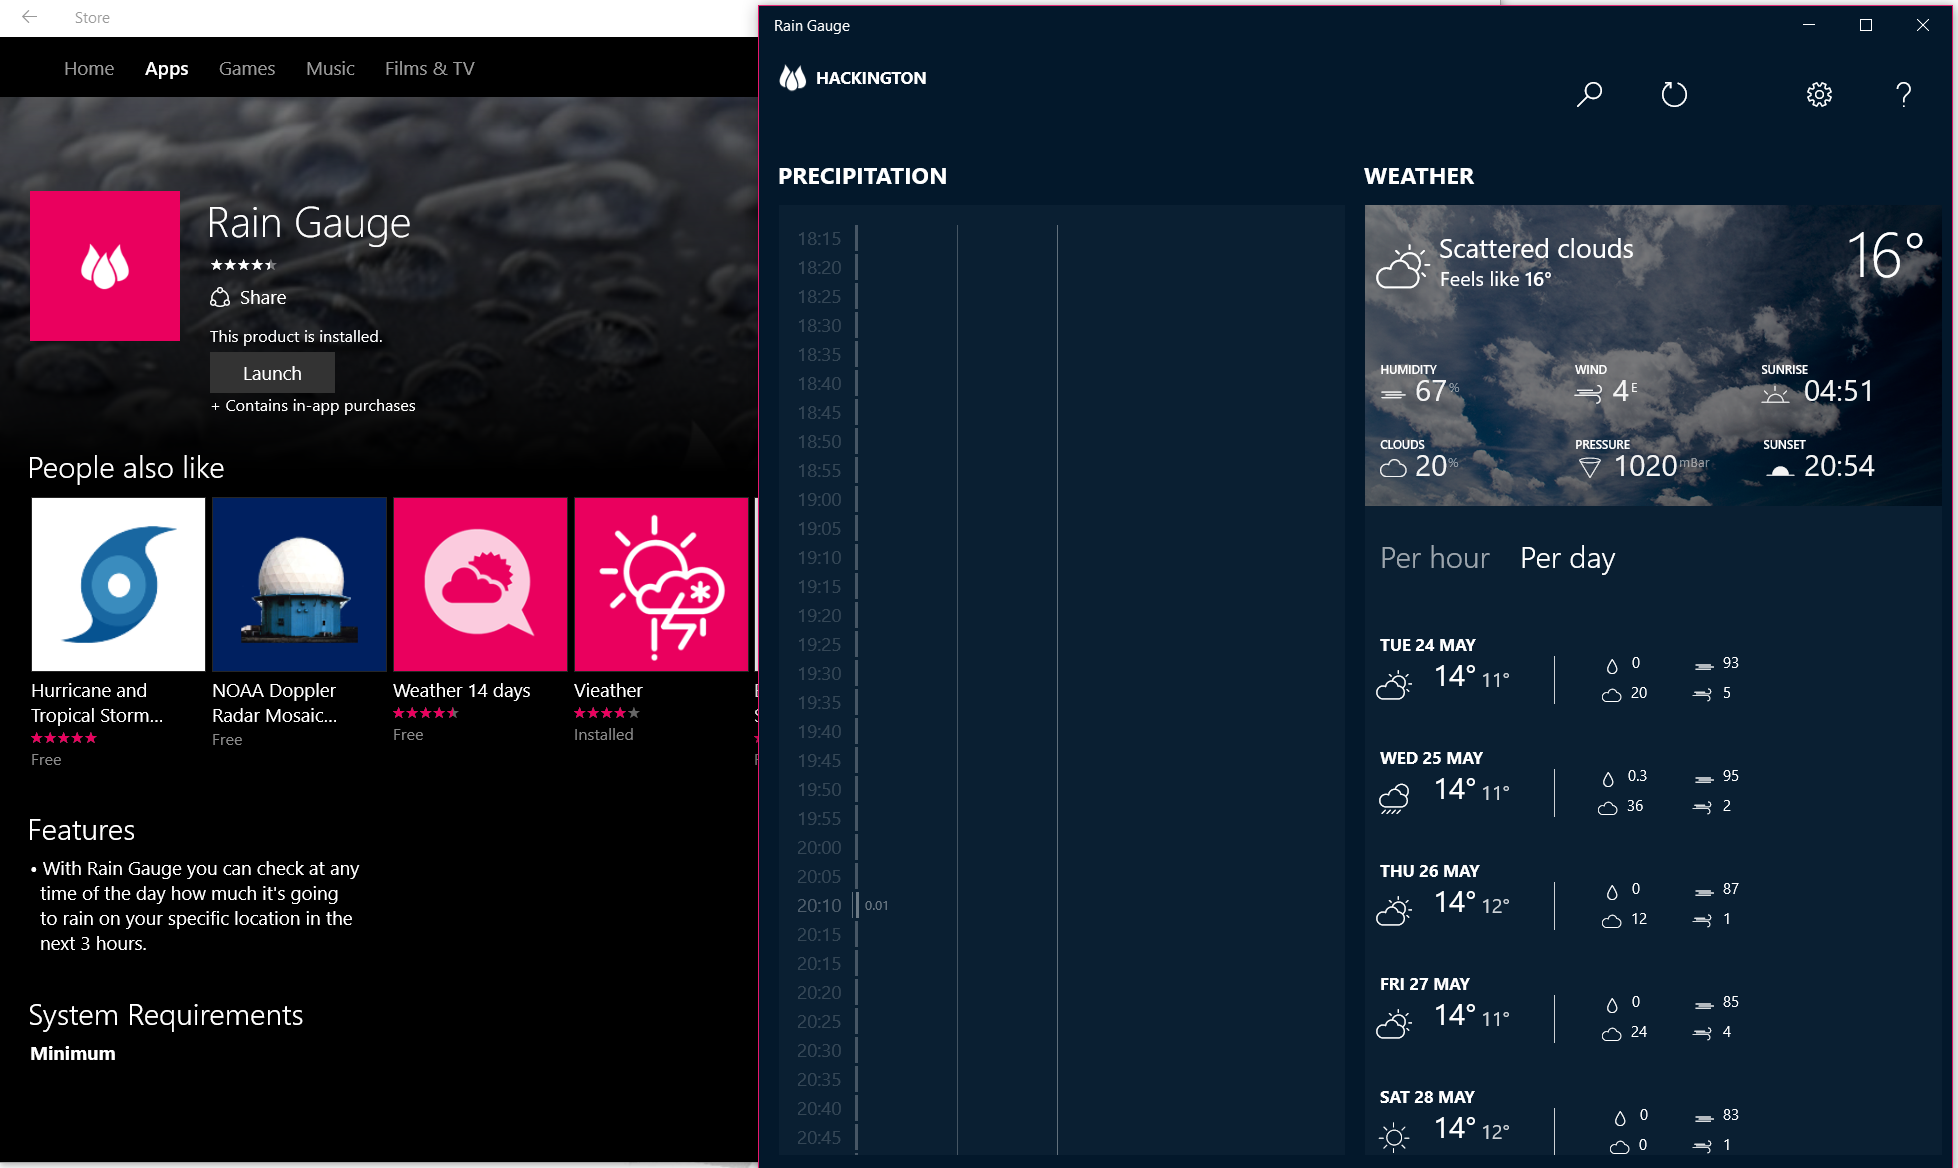 Rain Gauge is one of the neatest Windows 10 weather apps so far